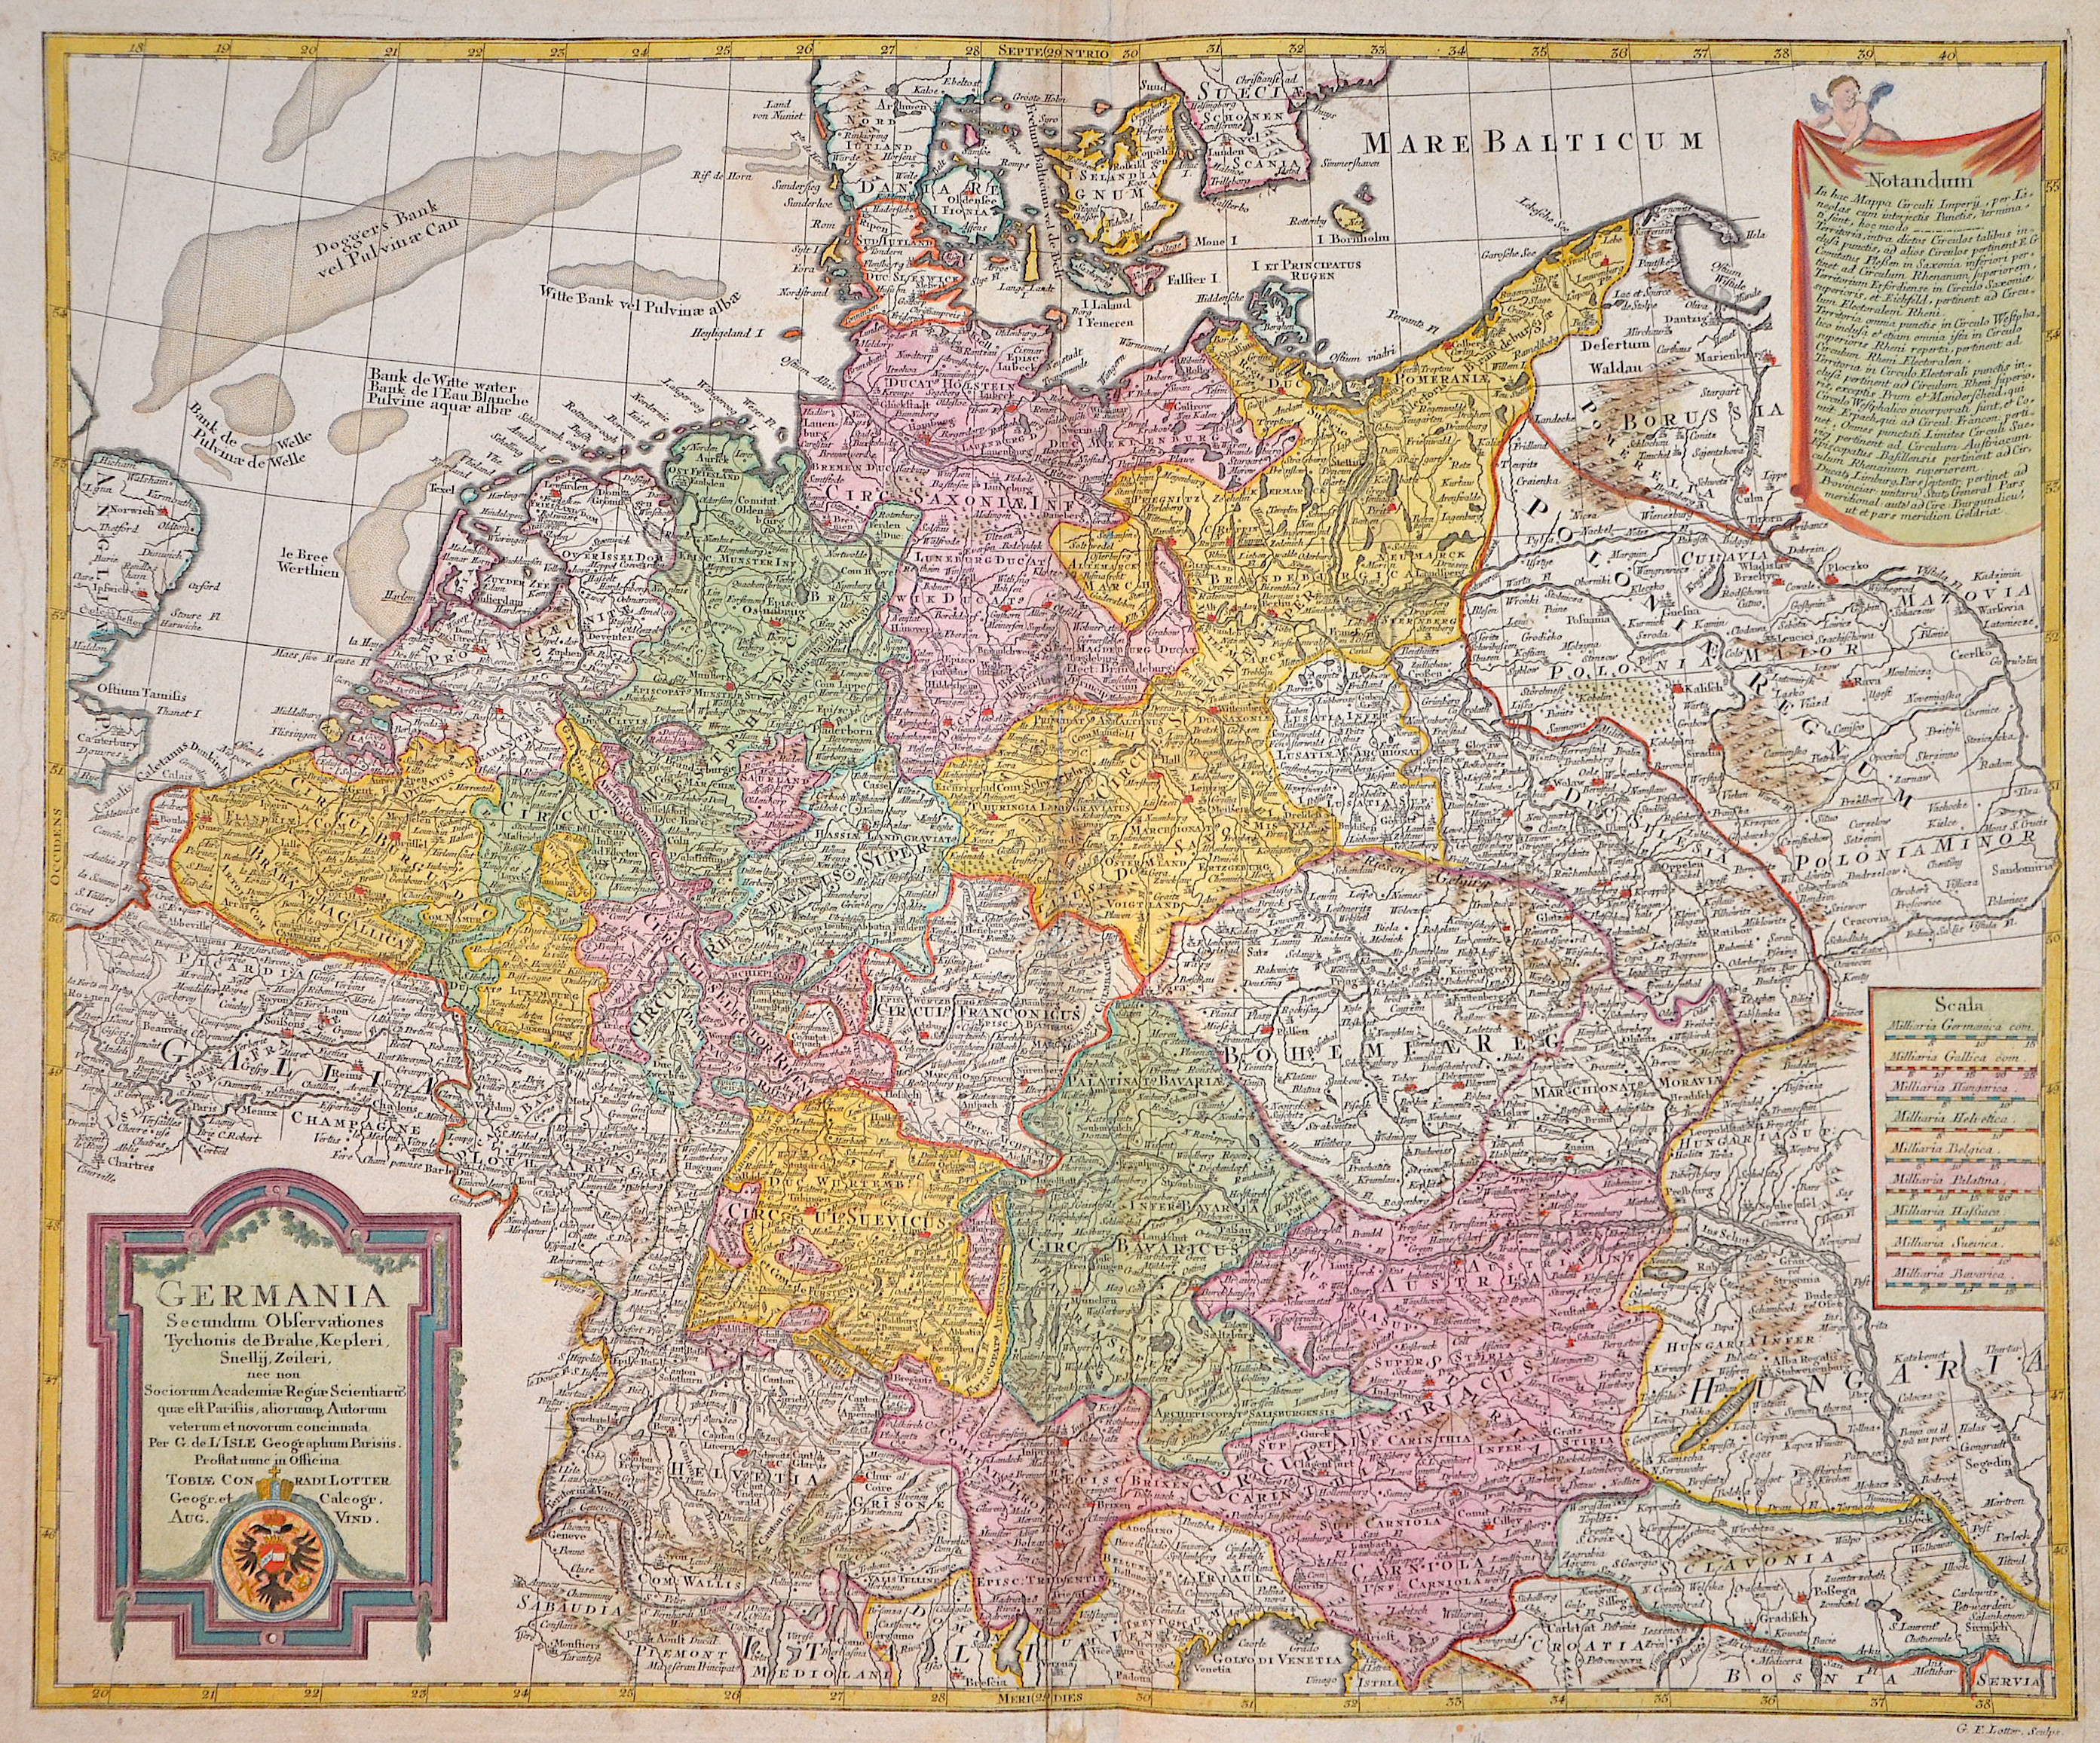 Lotter/ de l´Isle T.C. Germania secundum Observationes Tychonis de Brahe Kepleri…